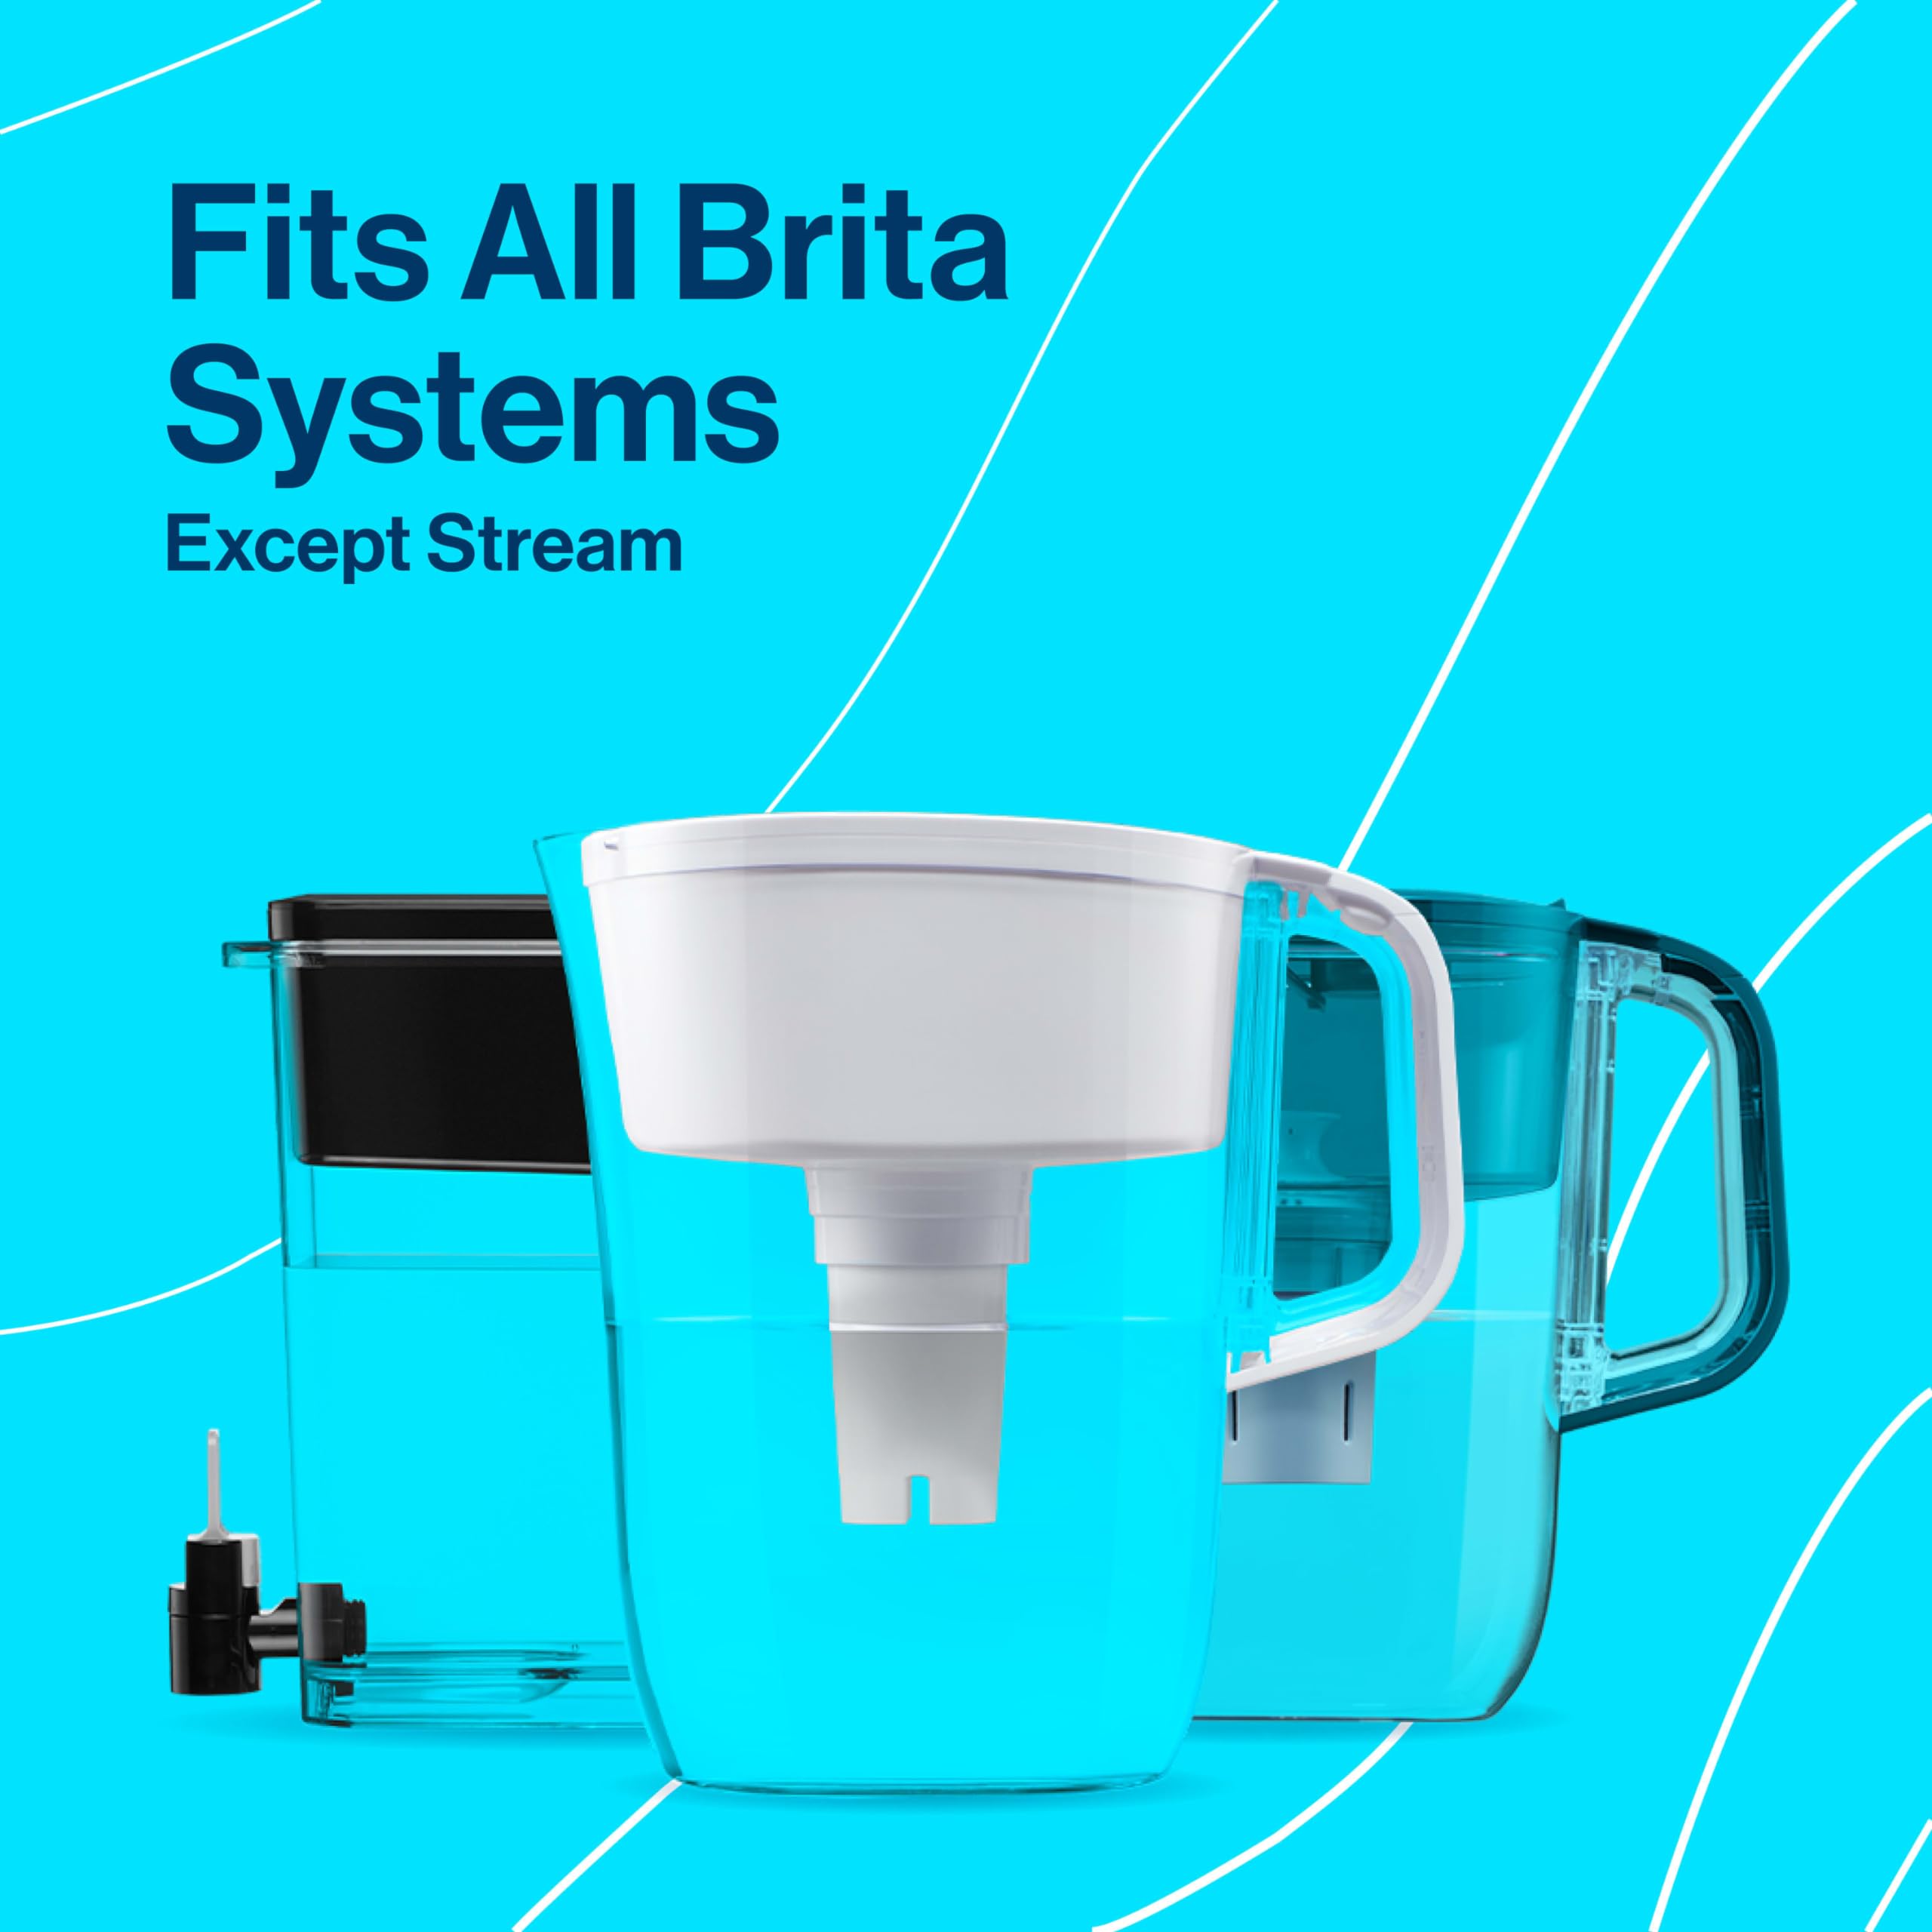 Brita Small 6 Cup Denali Water Filter Pitcher with 1 Brita Standard Filter, Made Without BPA, Transparent Teal